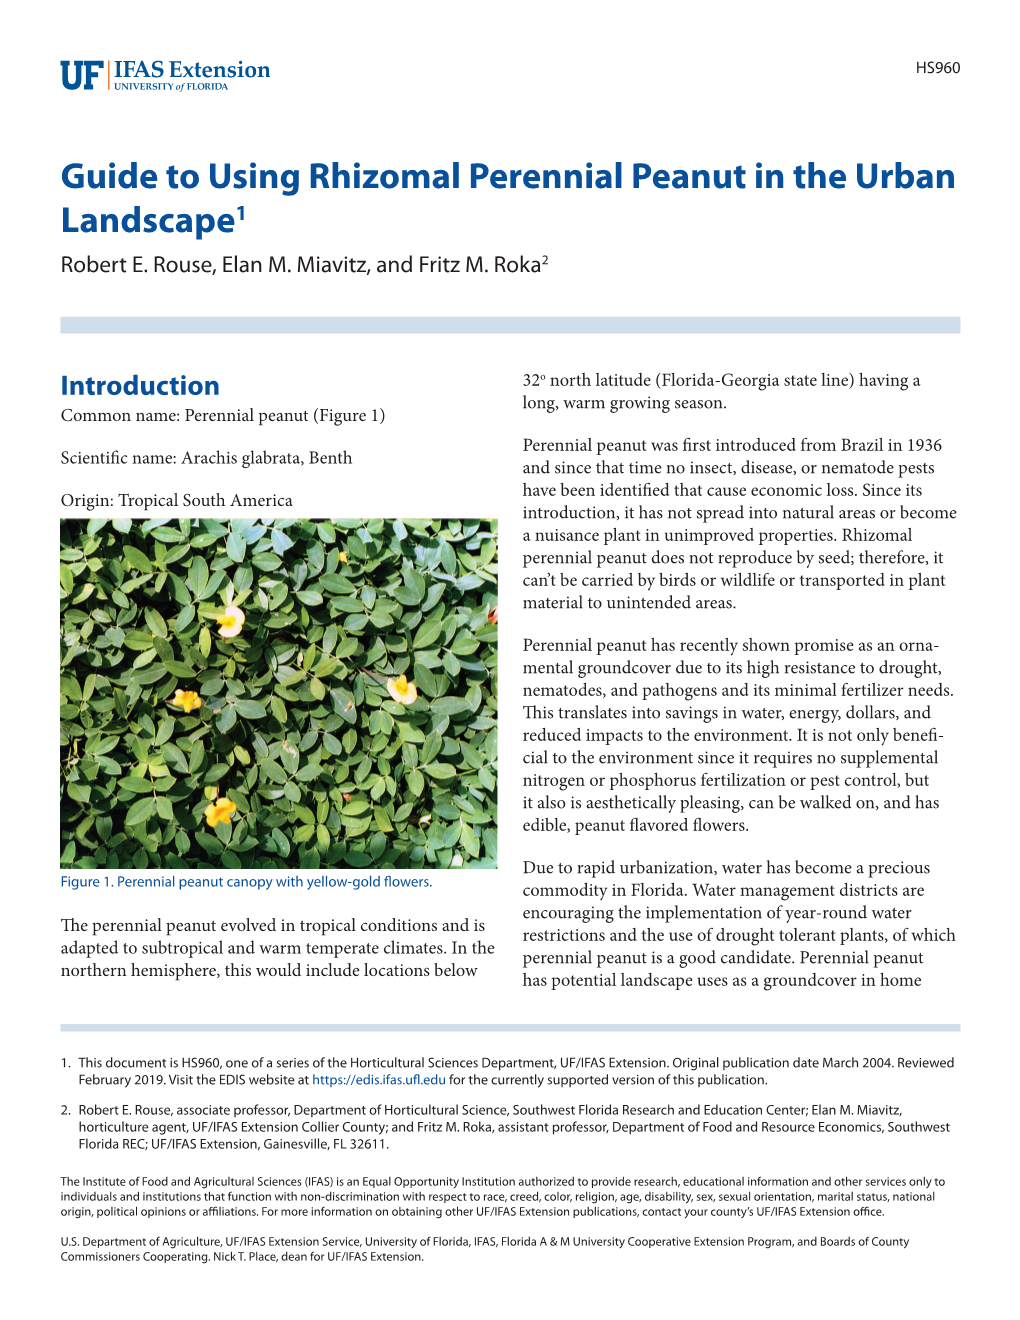 Guide to Using Rhizomal Perennial Peanut in the Urban Landscape1 Robert E